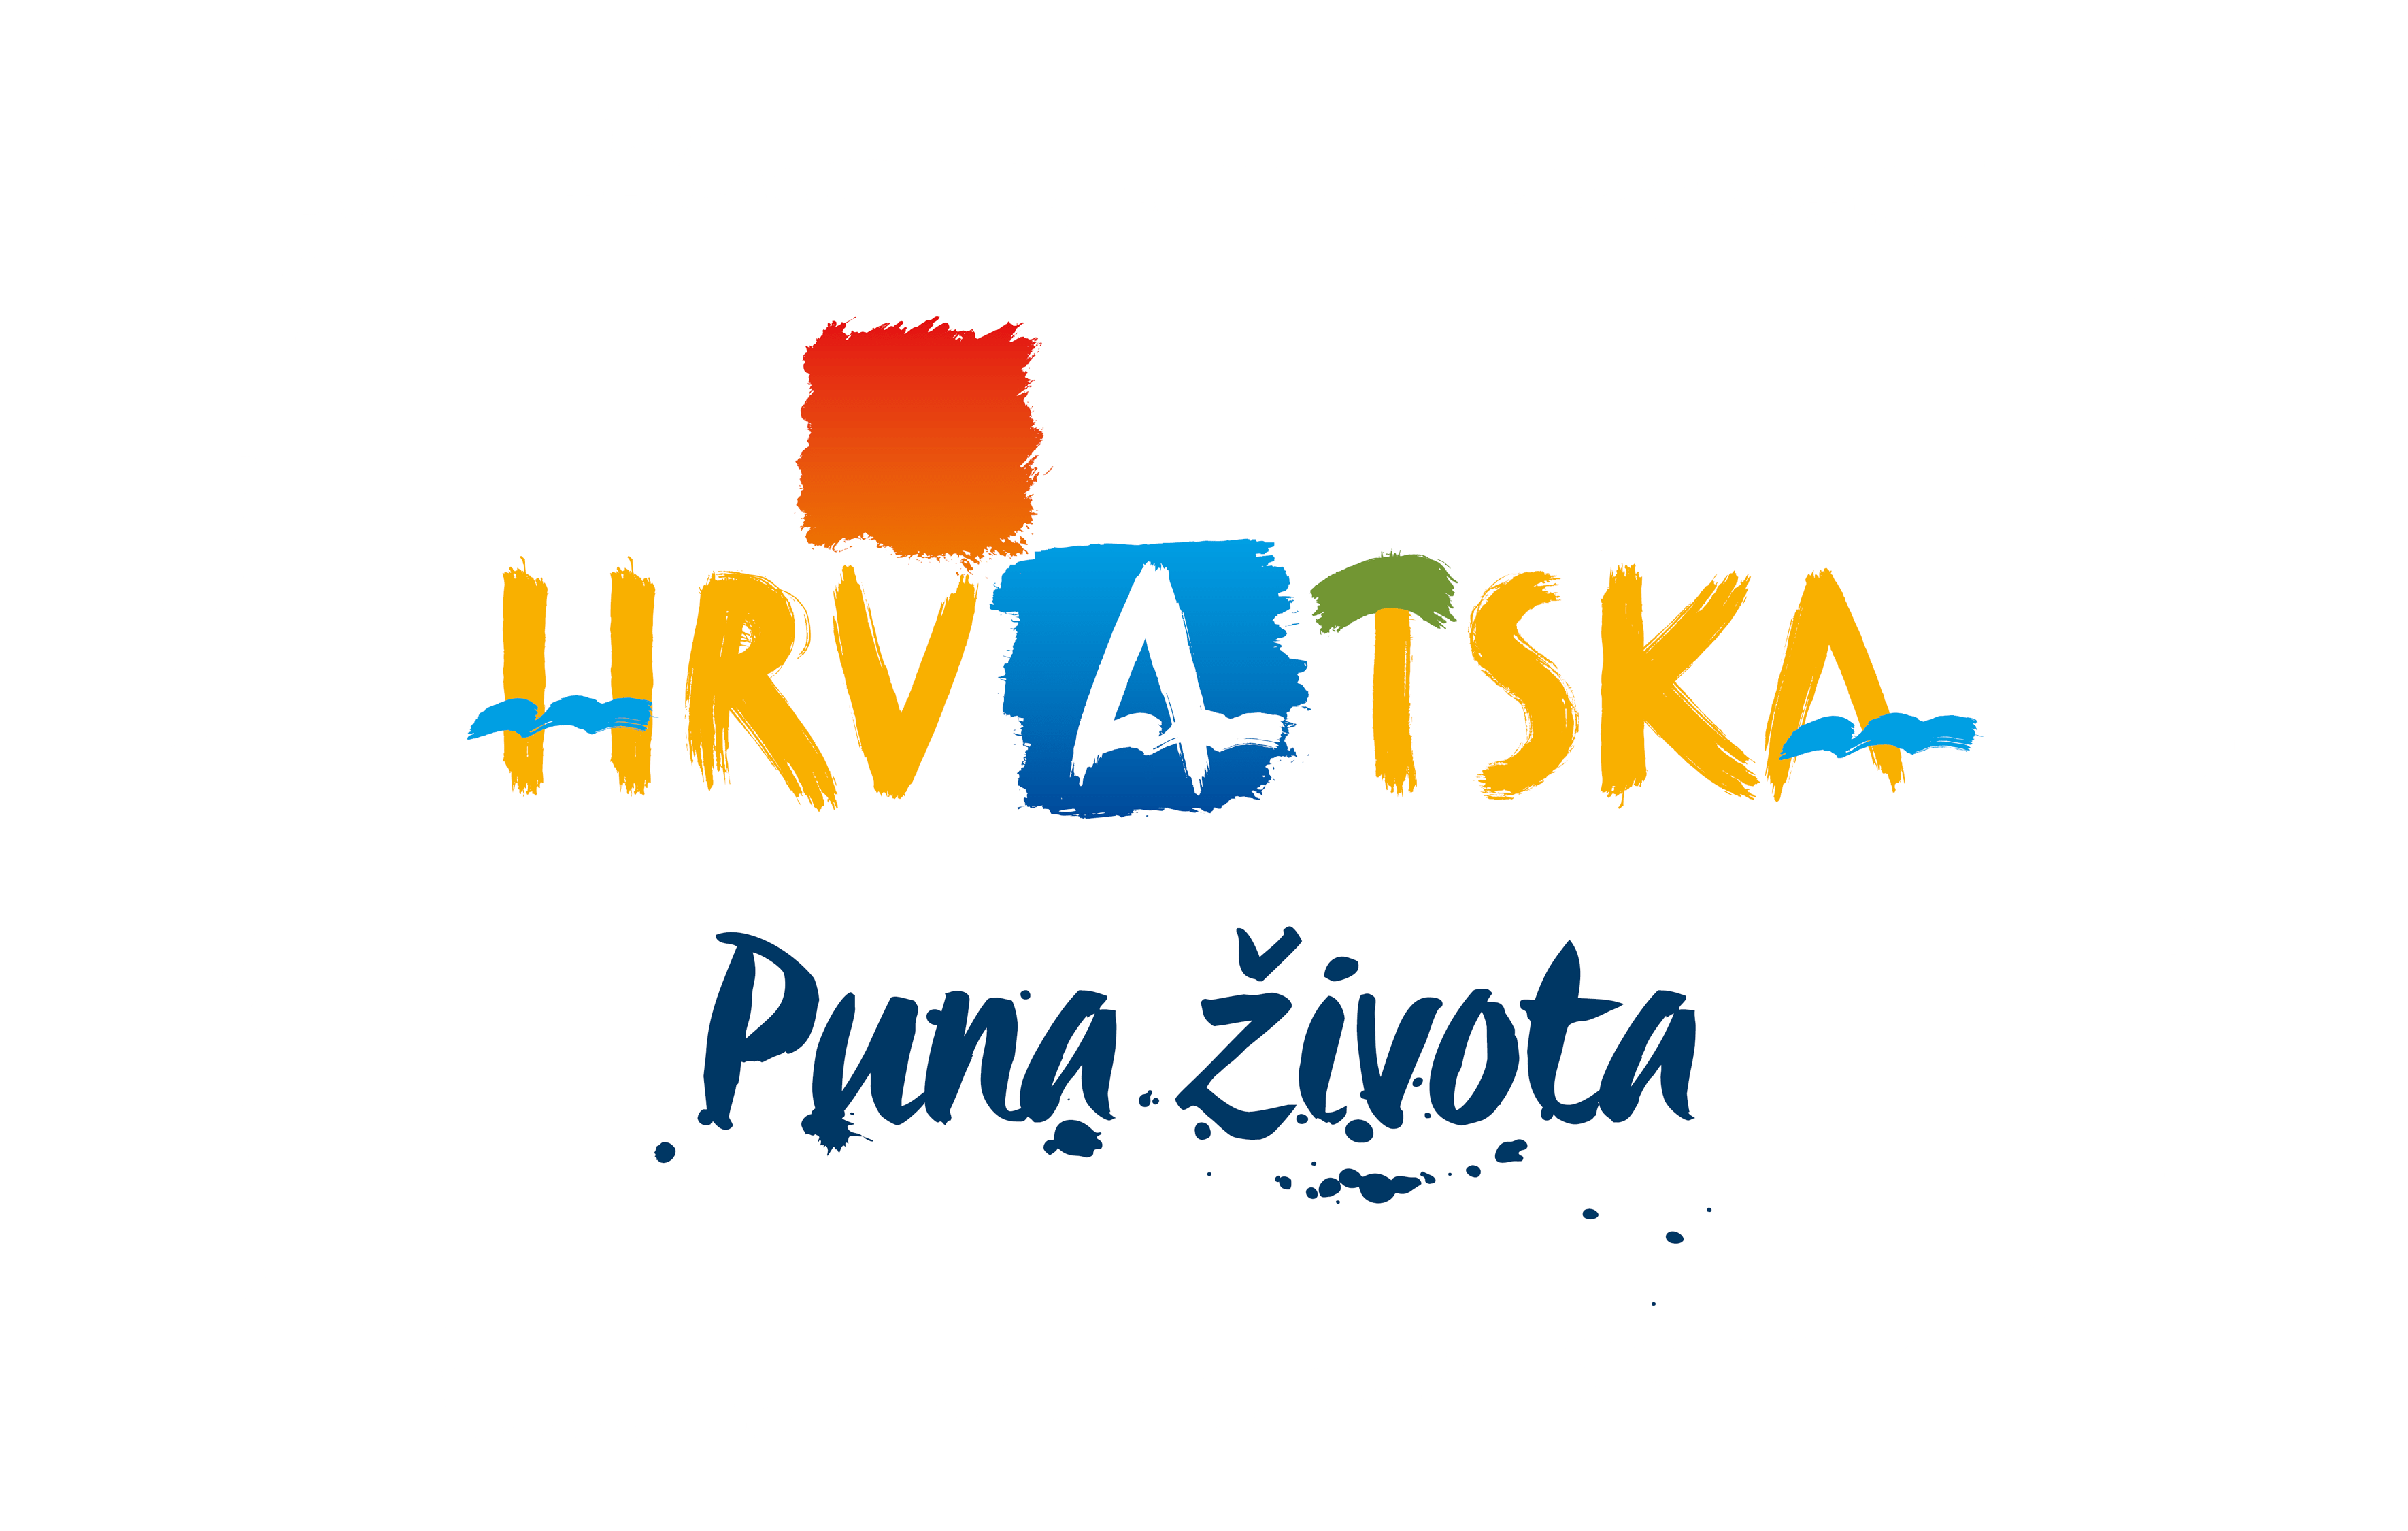 htz 2016 logo + slogan hrvatski rgb min